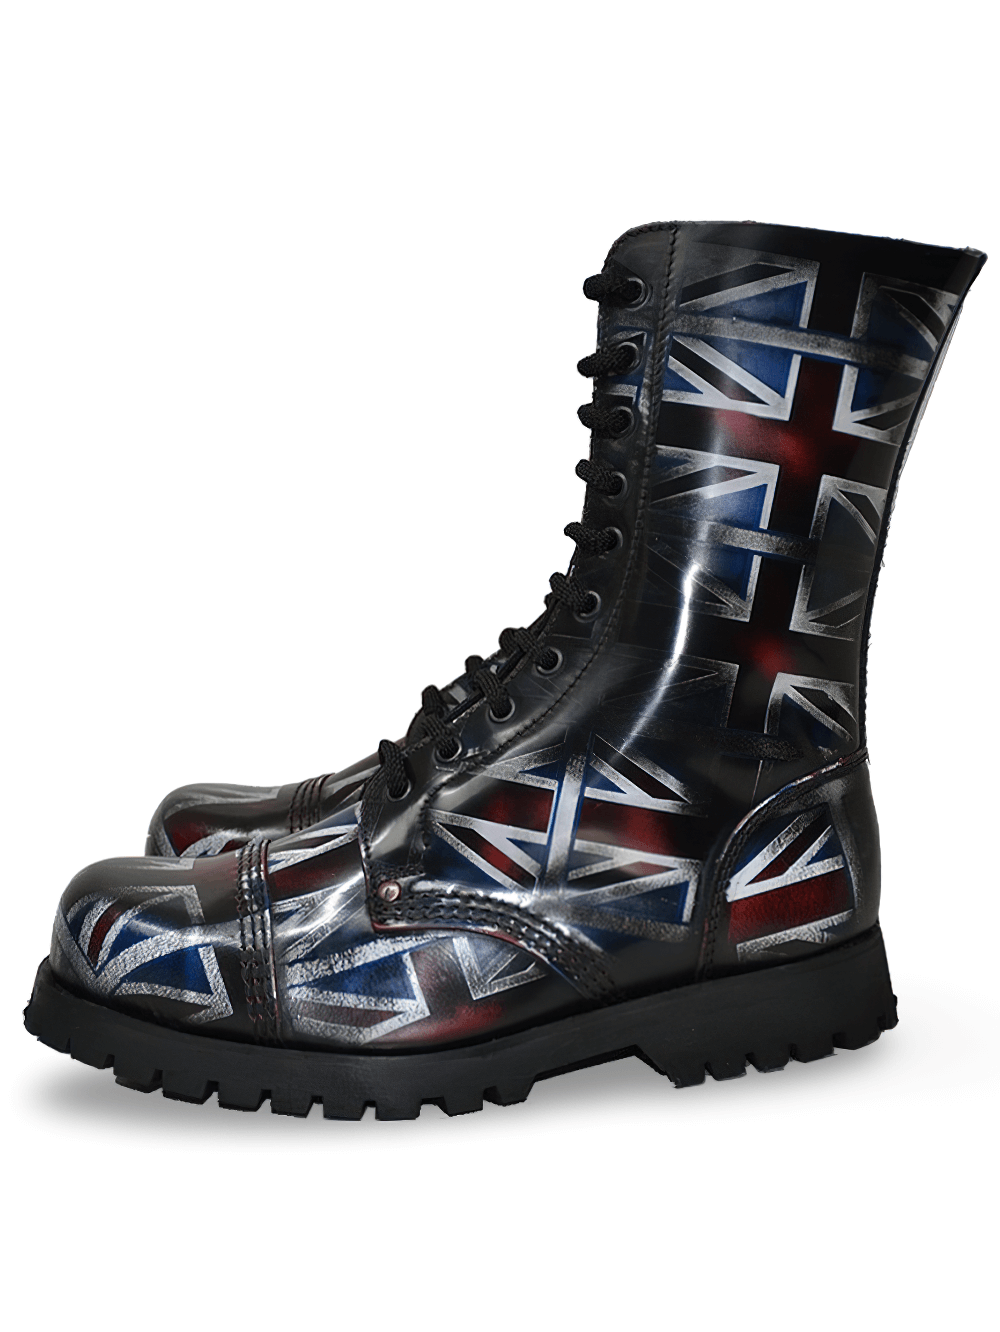 Union Jack 10-Eyelet Ranger Boots with Steel Toe